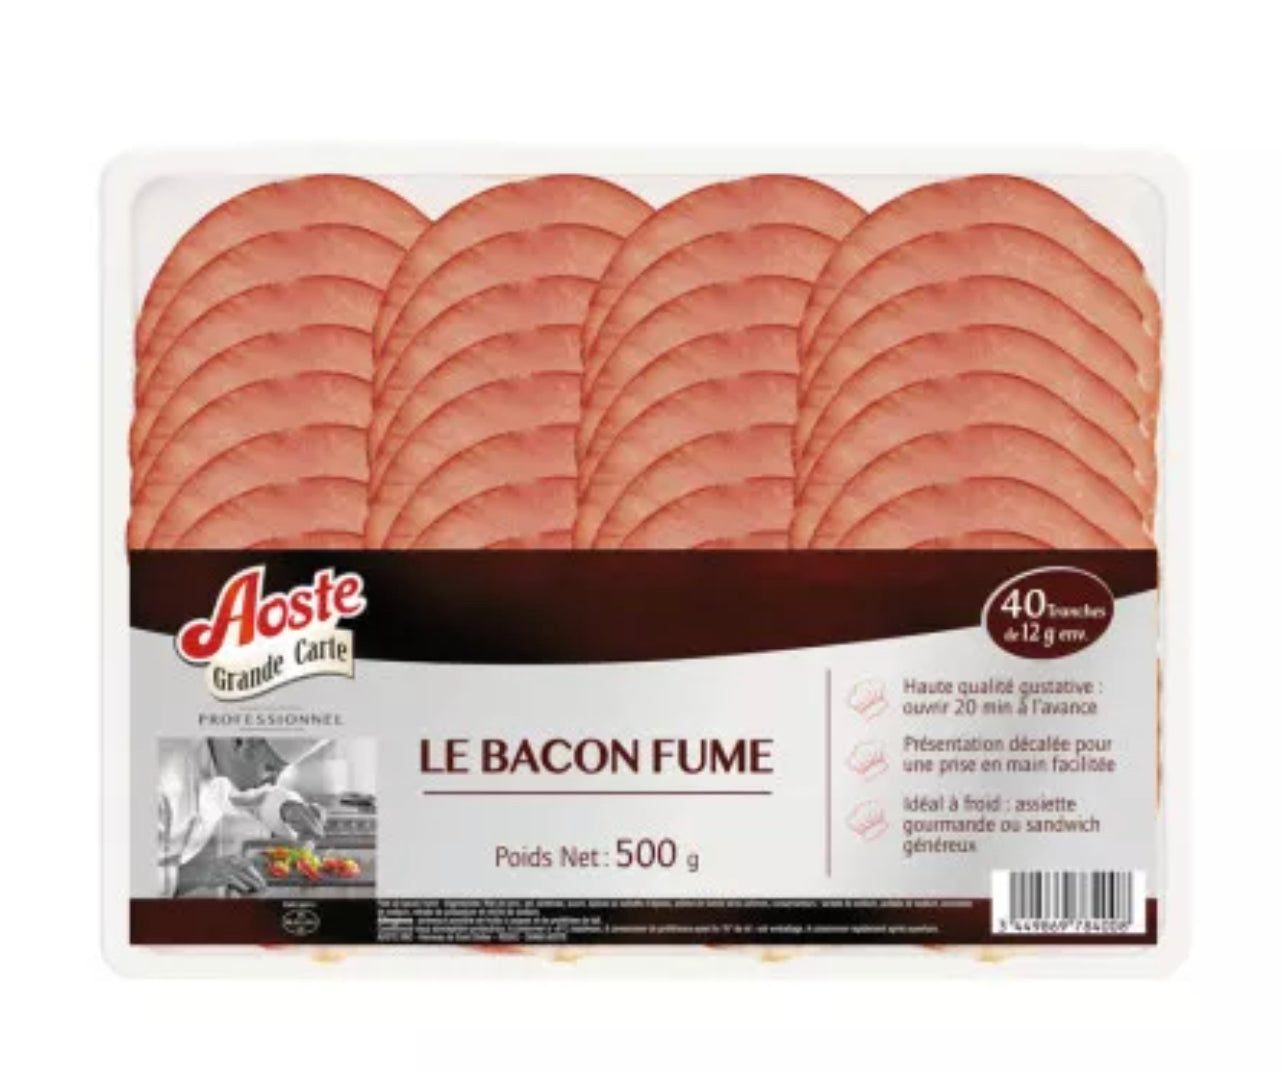 Bacon fumé x40 - 500g